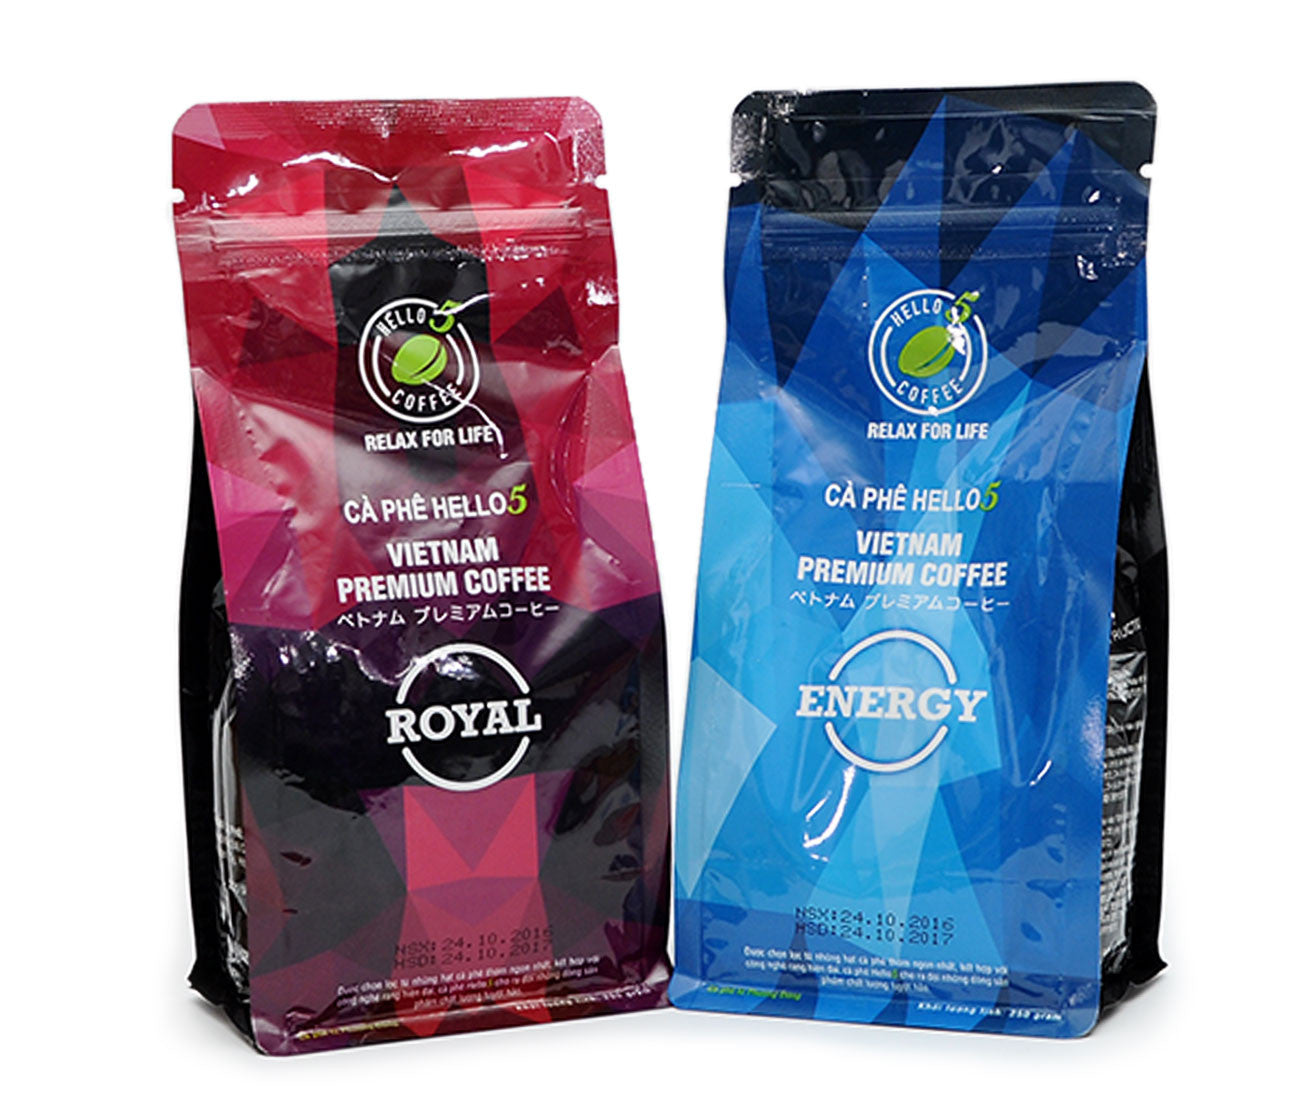 Hello 5 Vietsnamese Premium Coffee 250 gram Energy, Royal